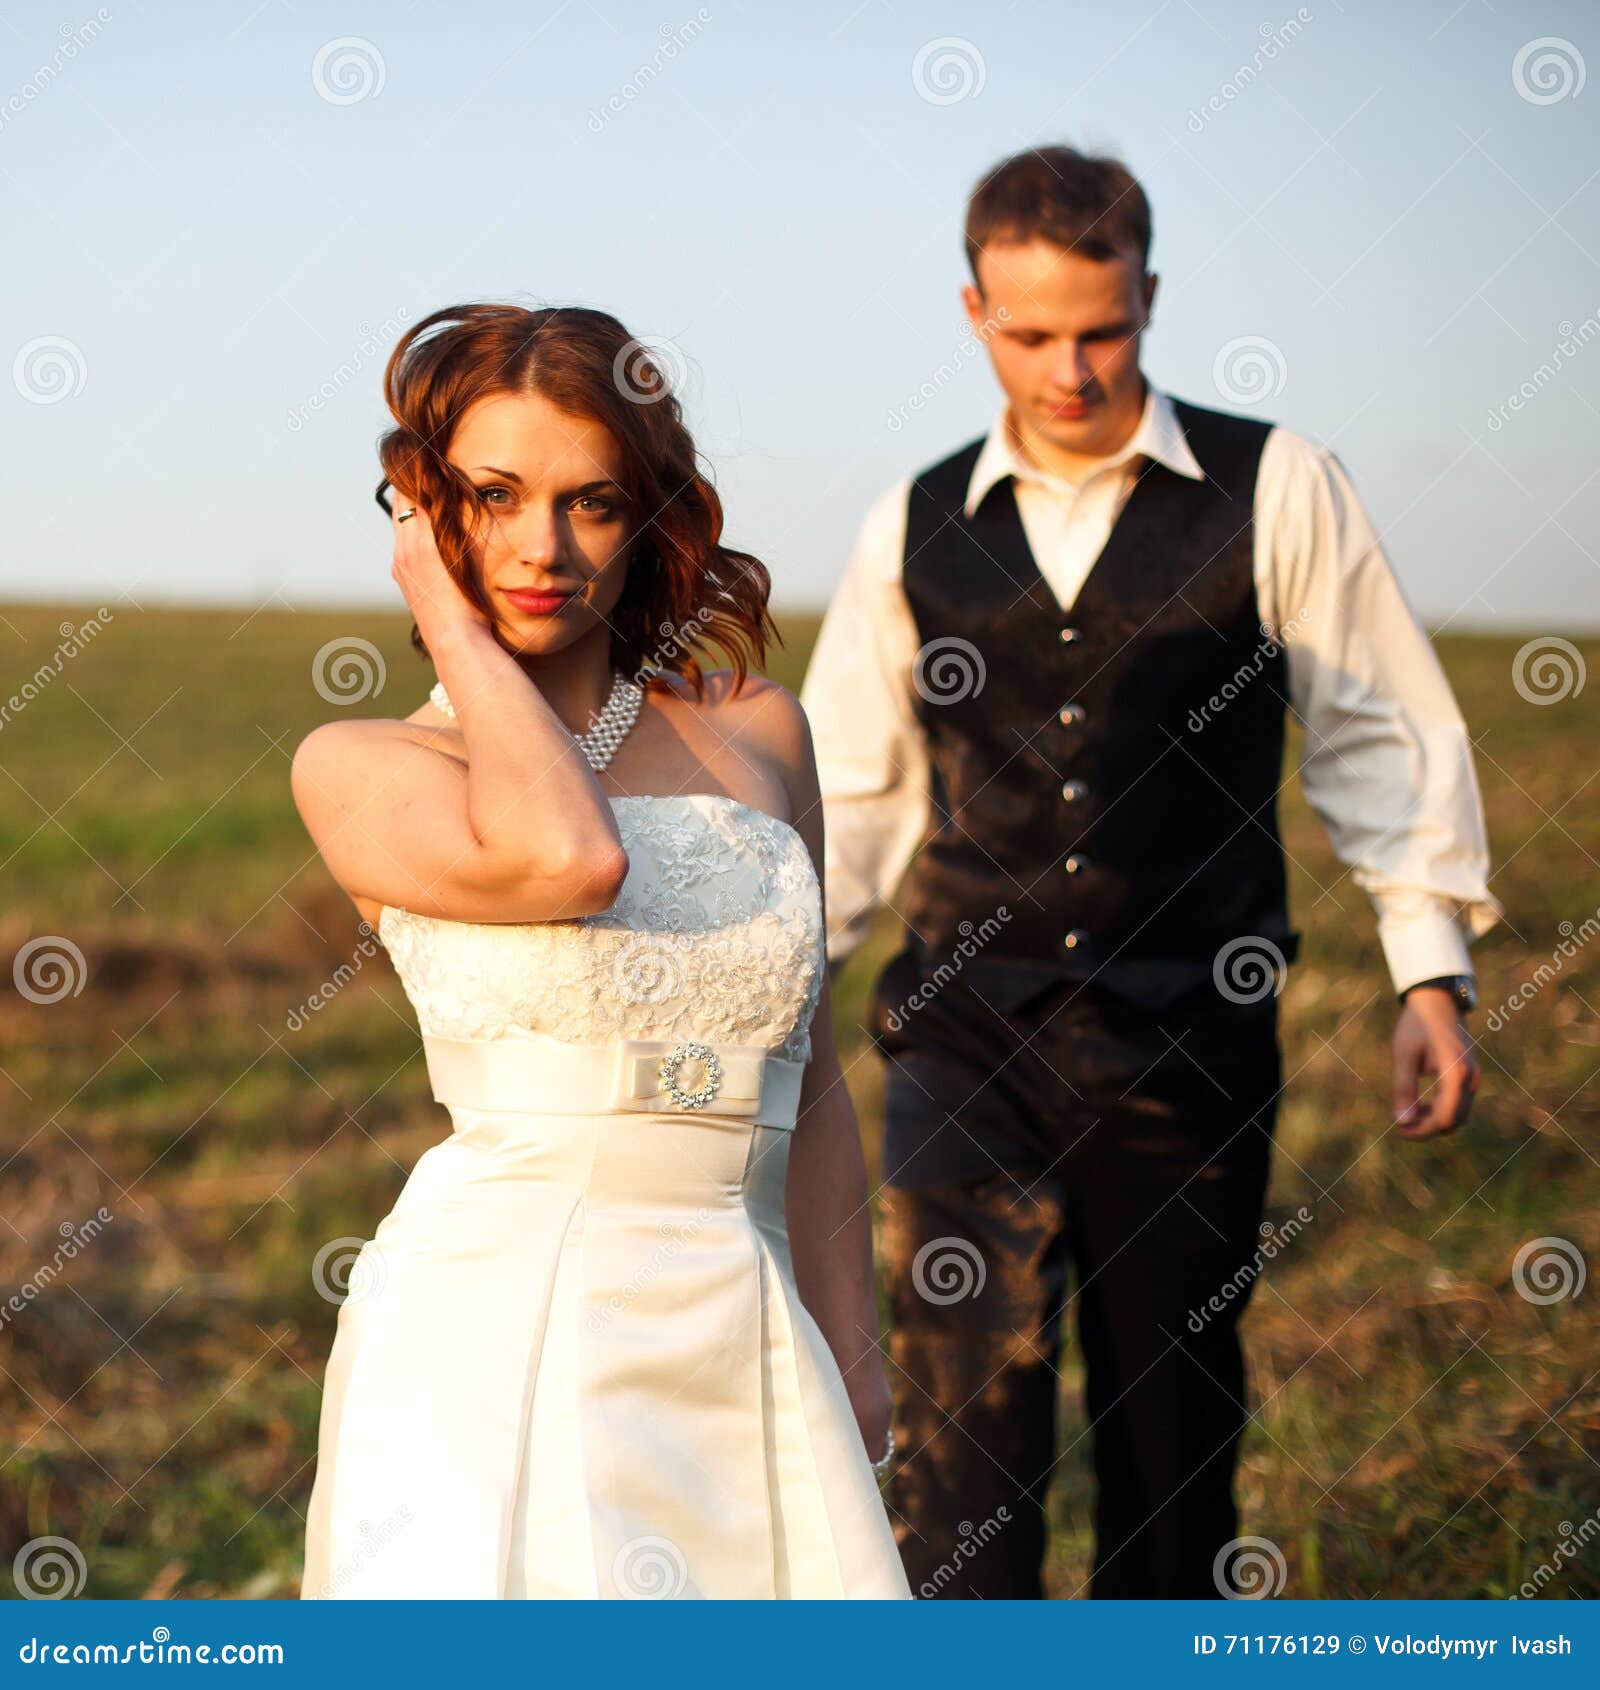 Top 103+ Images woman walks in front of groom Full HD, 2k, 4k